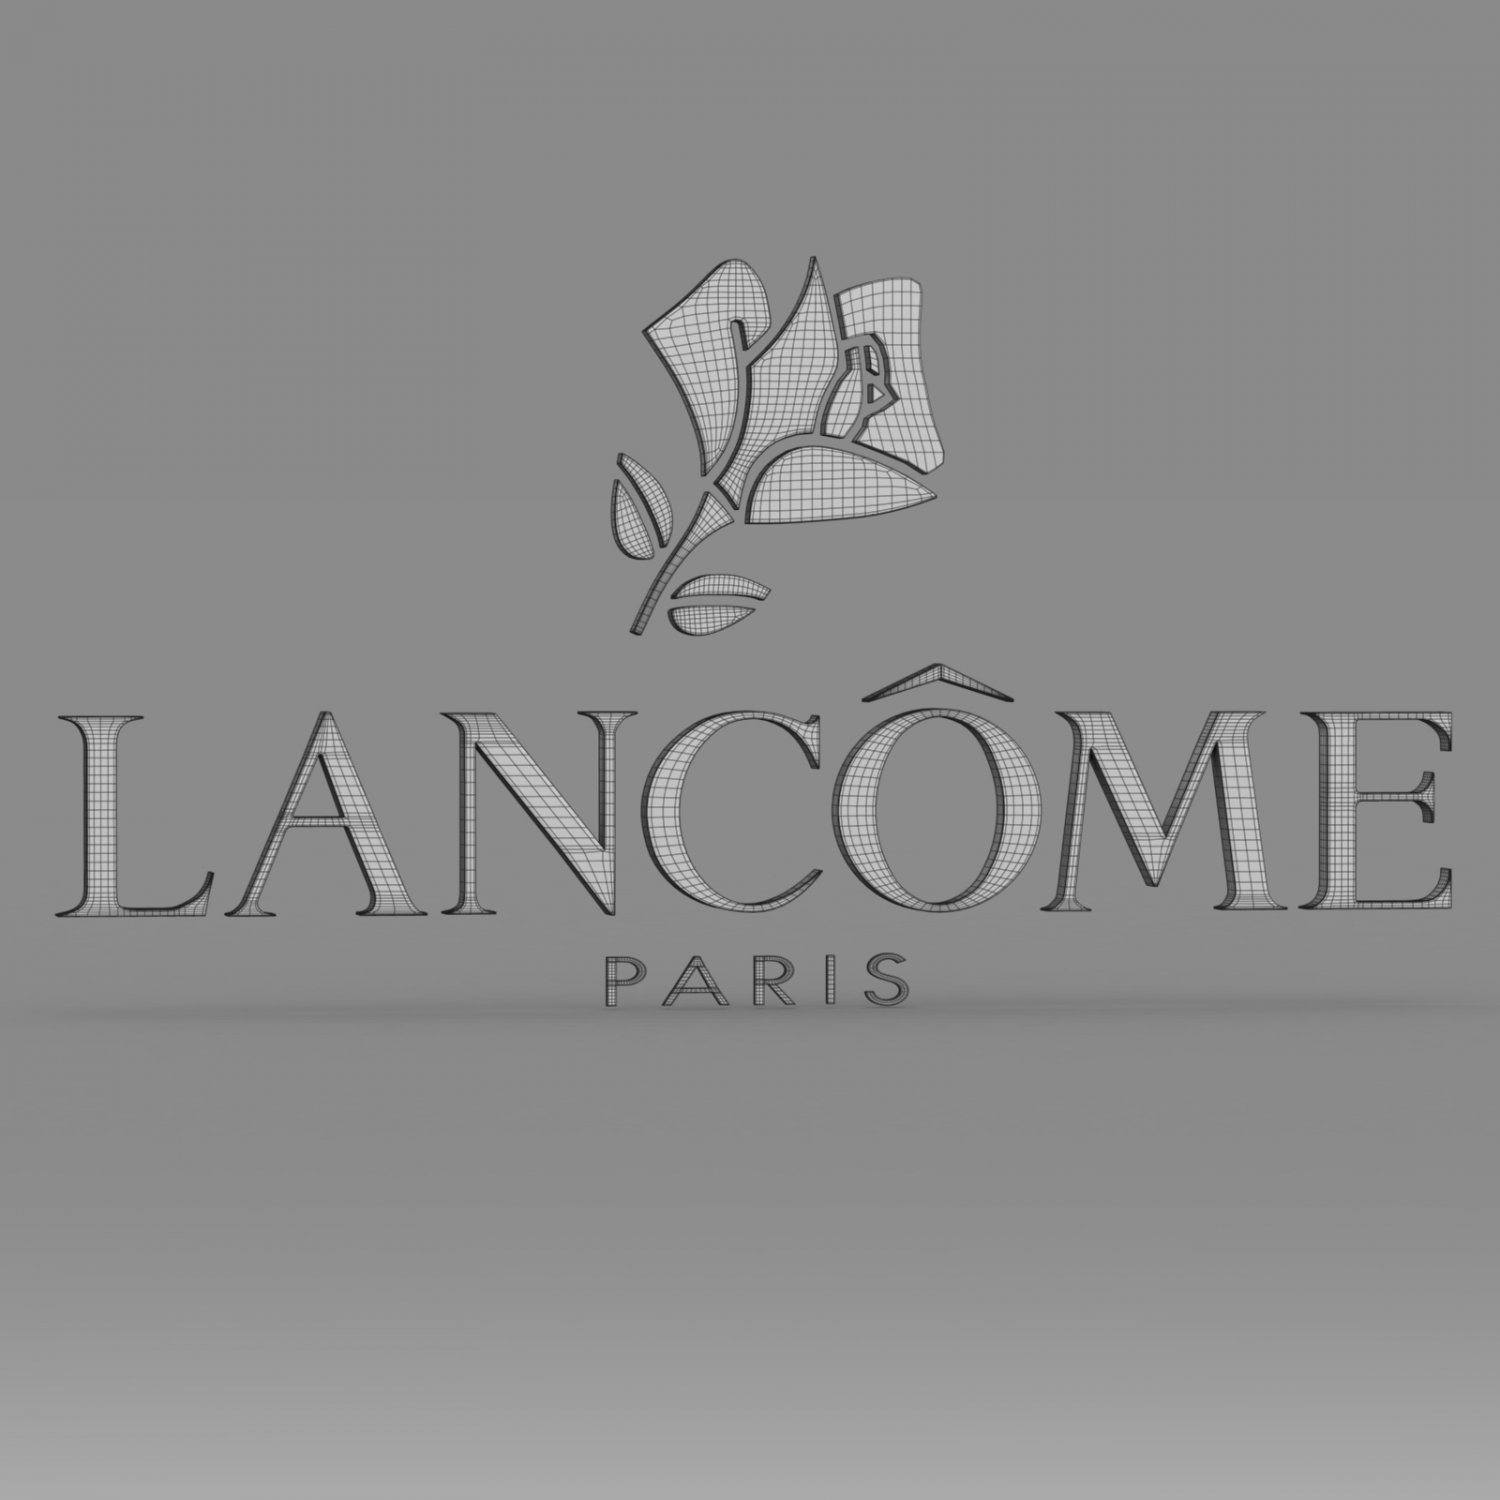 lancome logo